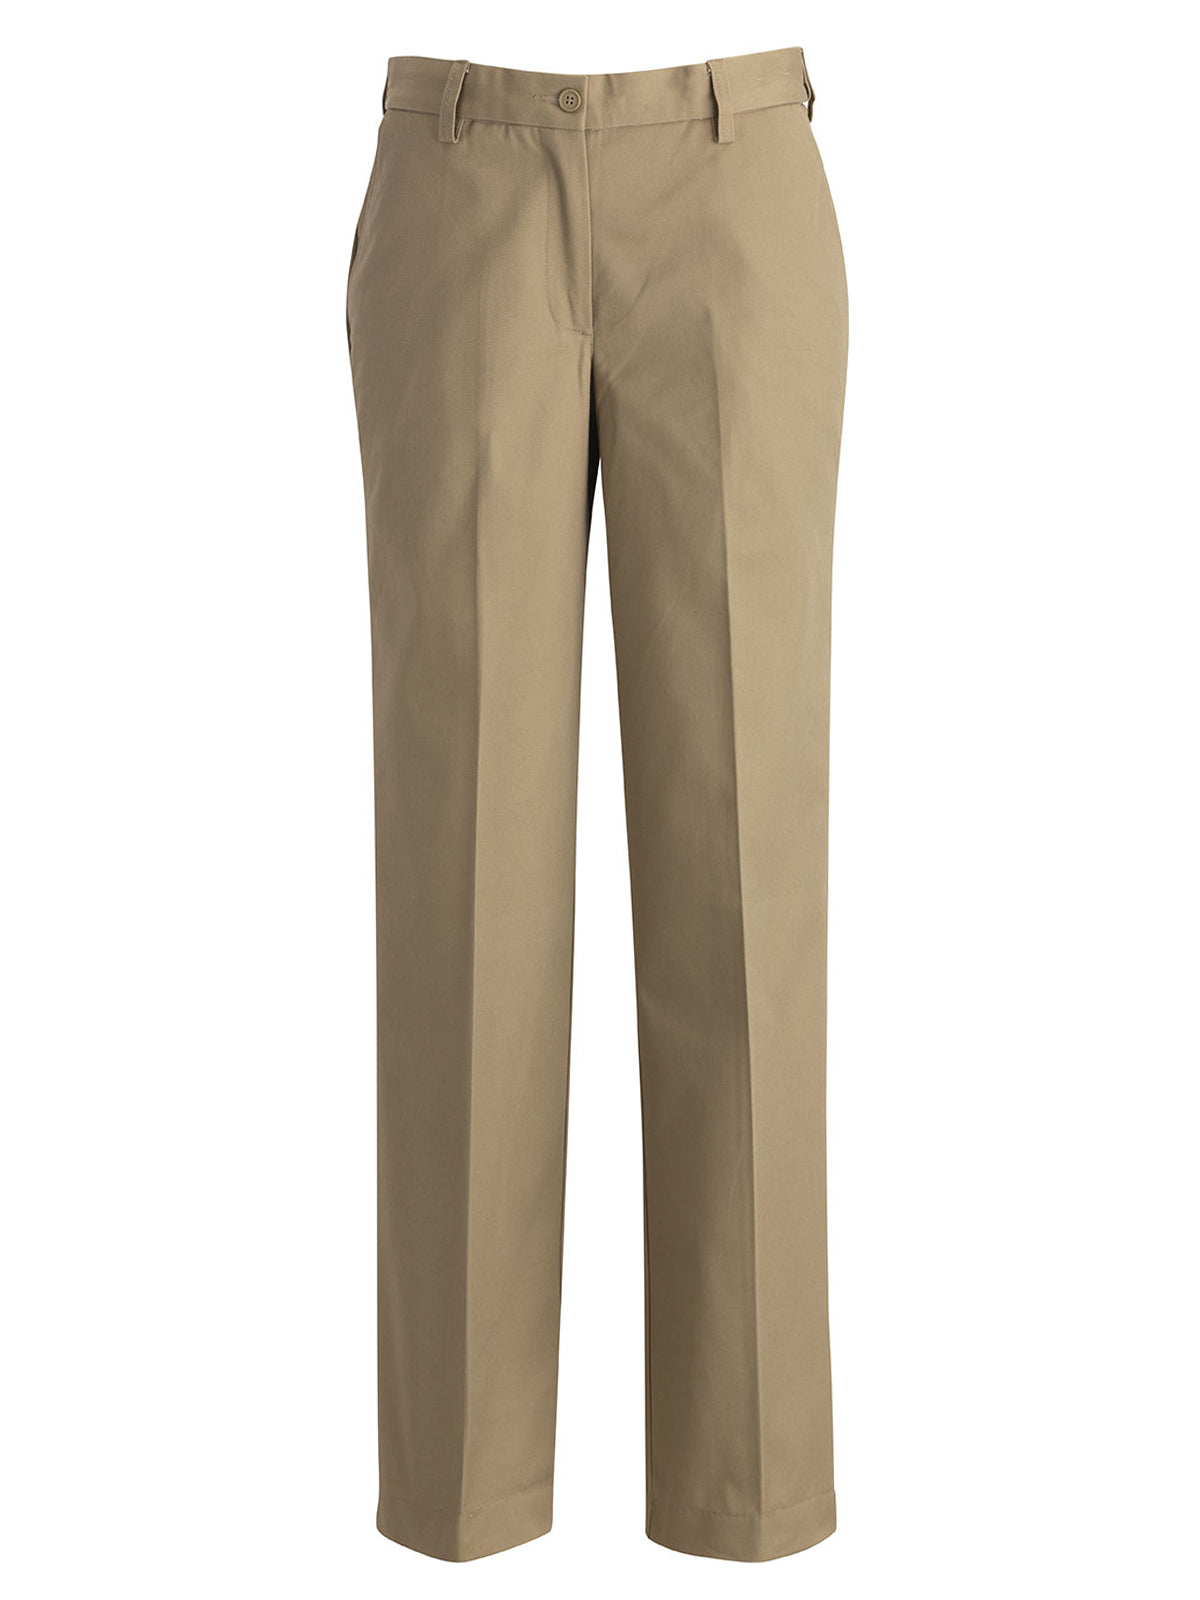 Women's EZ Fit Utility Chino Pant (Sizes: 30 x 34 to 32 x UL)